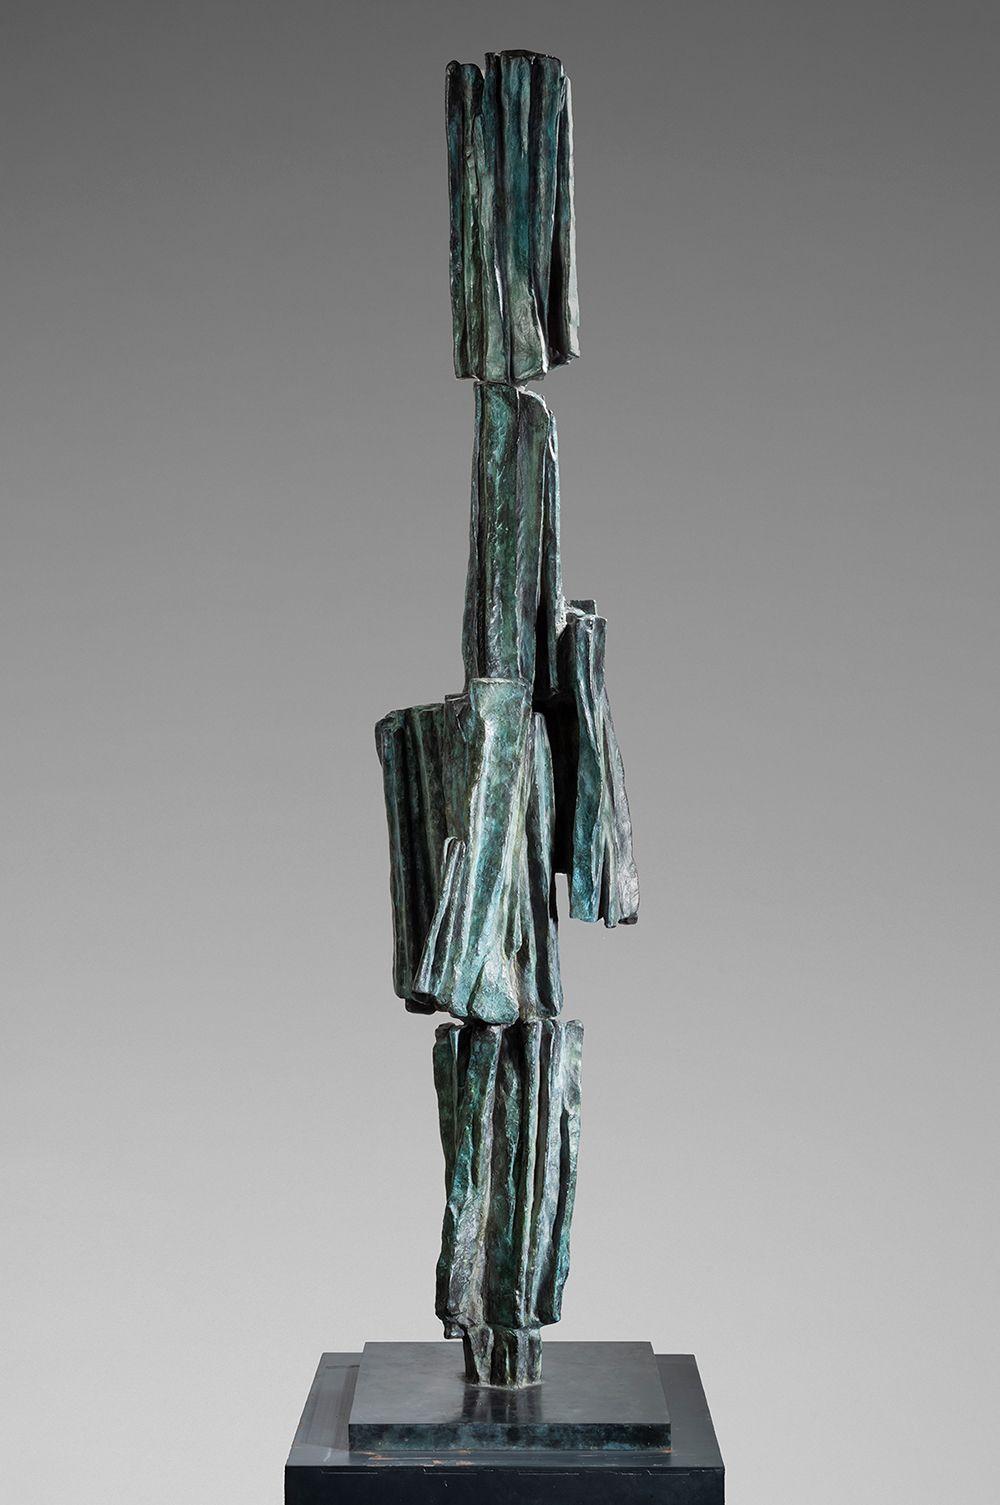 Abstract Sculpture Martine Demal - Signs & Writings No. 1 de M. I. - grande sculpture en bronze, abstraite, d'une hauteur de 1,80 m.